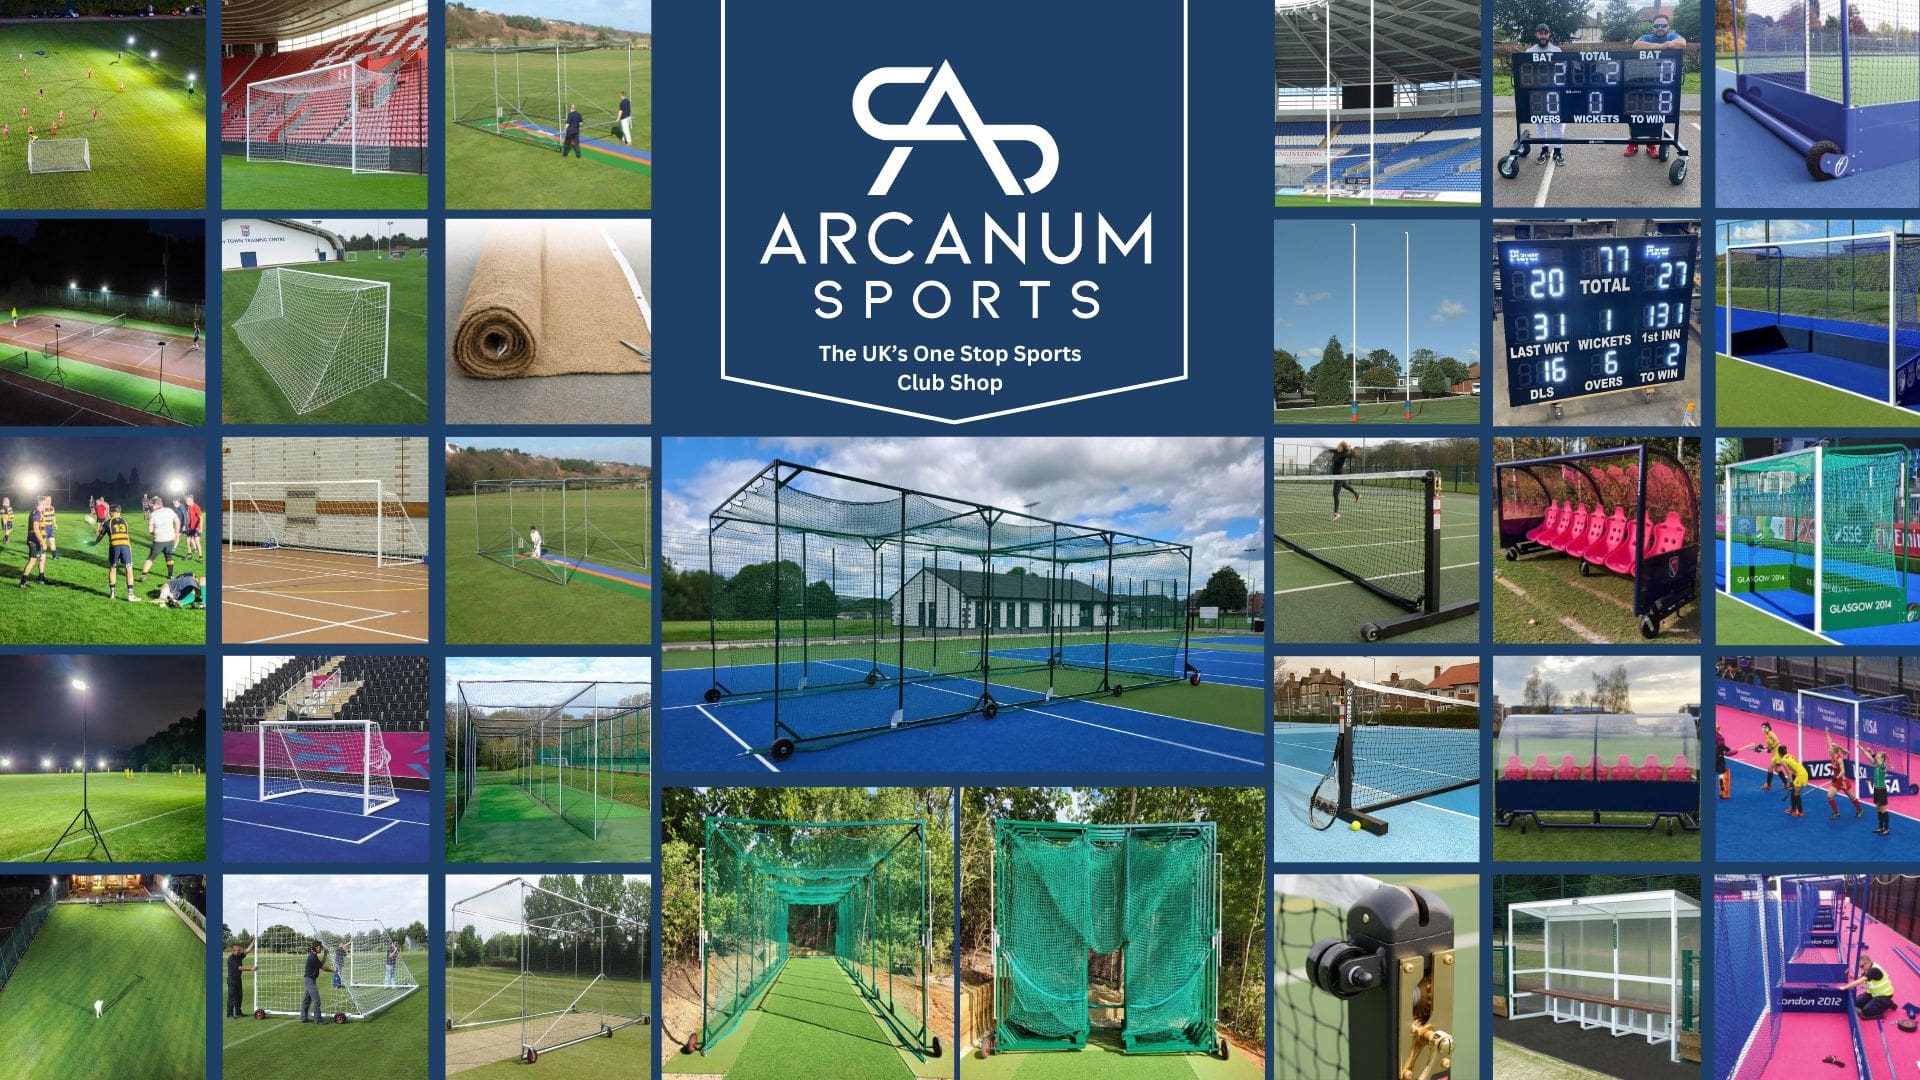 one-stop-sports-club-shop-arcanum-sports